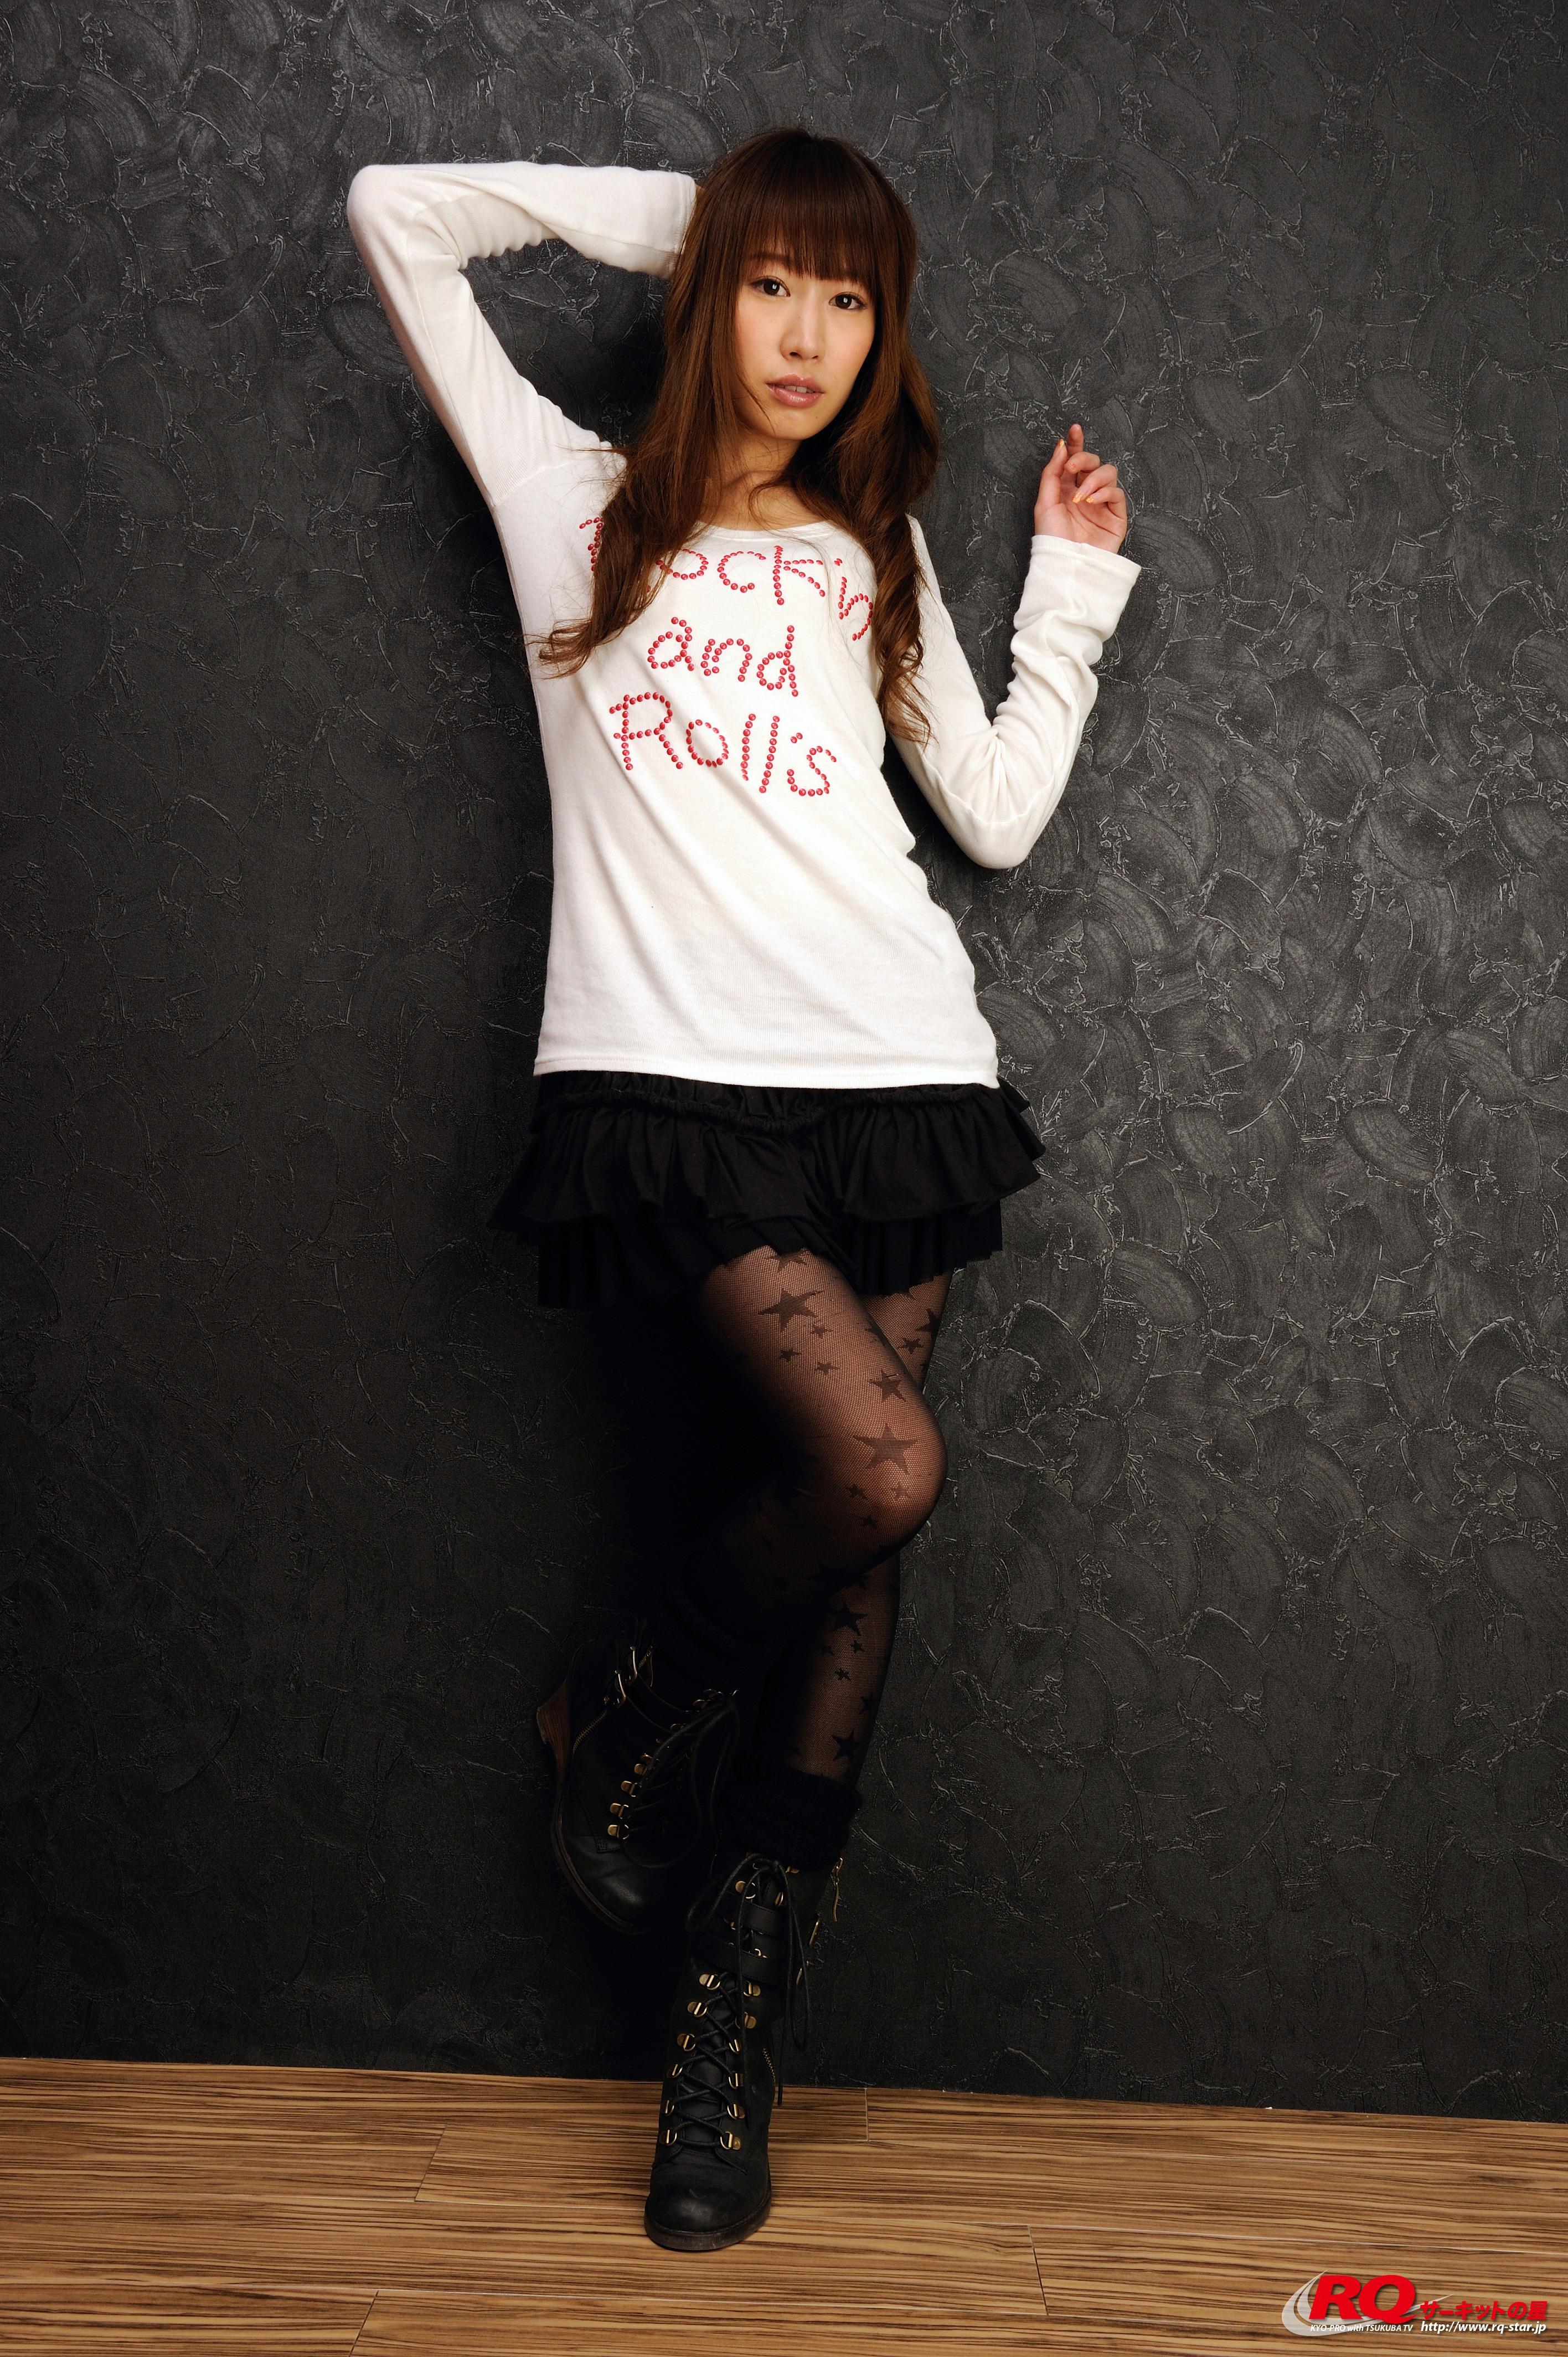 [RQ-STAR写真]NO.00100 椎名りりこ（椎名梨梨子，山本里奈，Rina Yamamoto）黑色短裙加黑色丝袜美腿性感私房写真集,